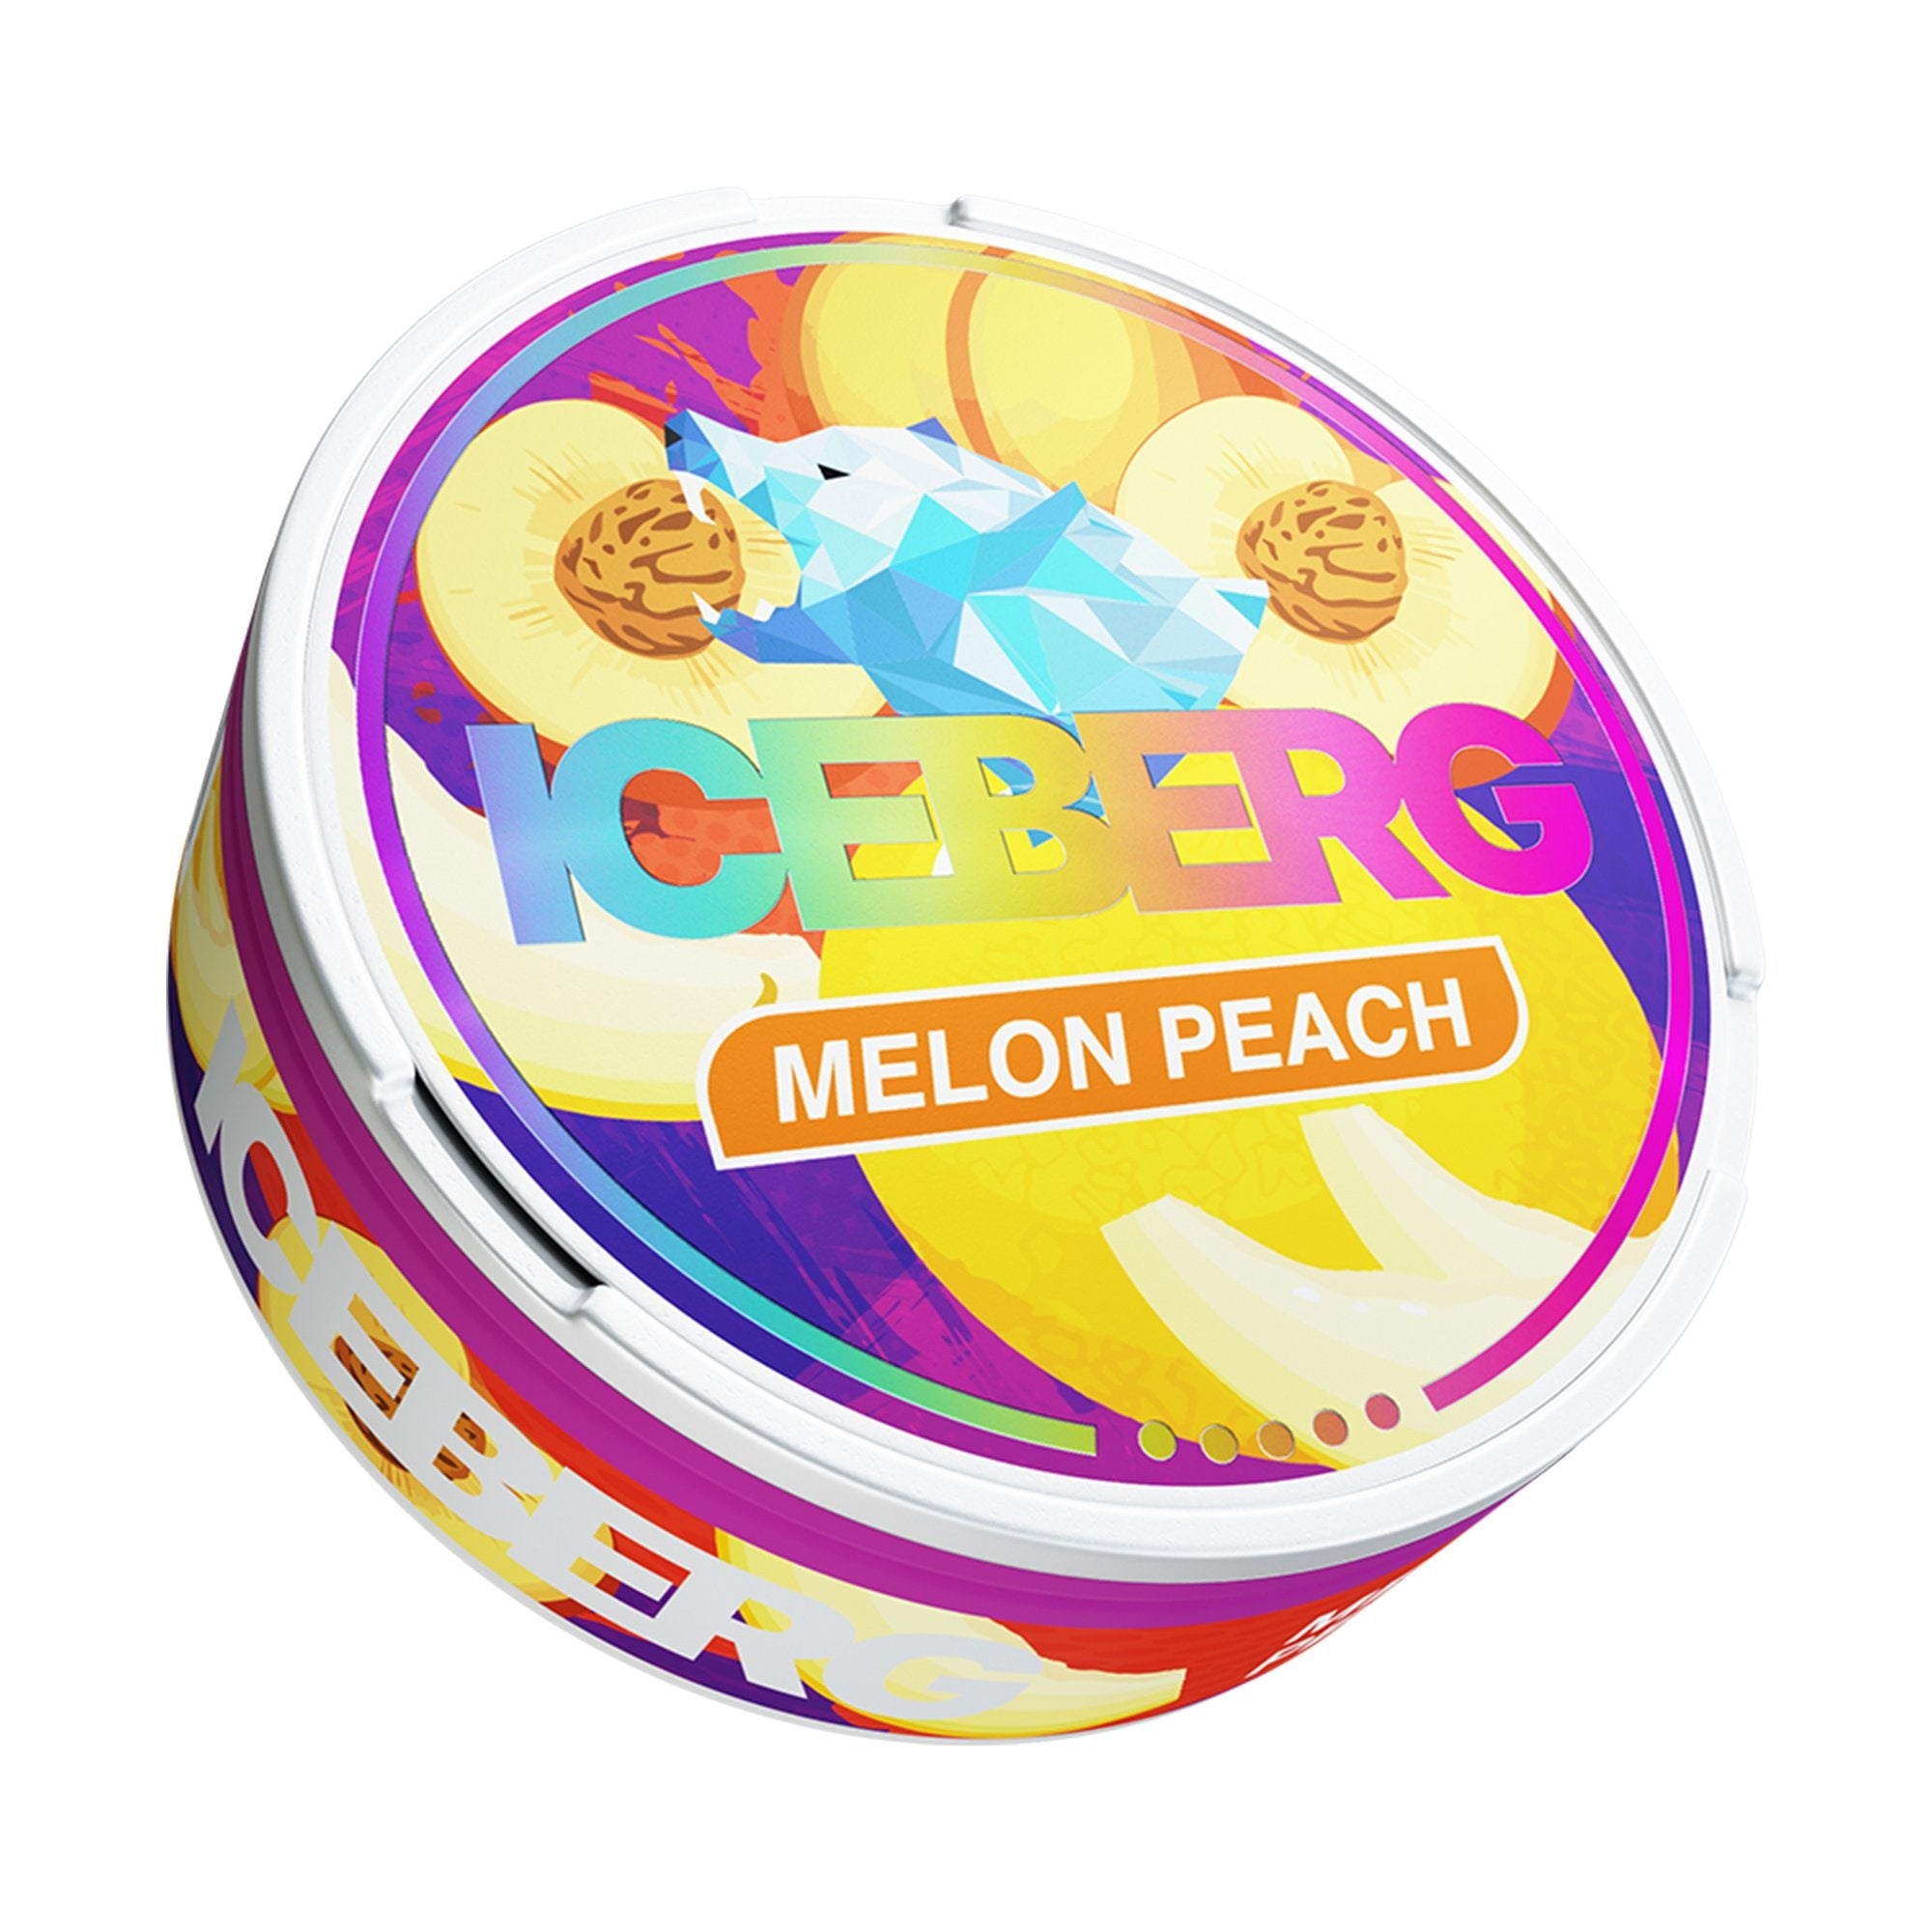 Iceberg Melon Peach - EUK